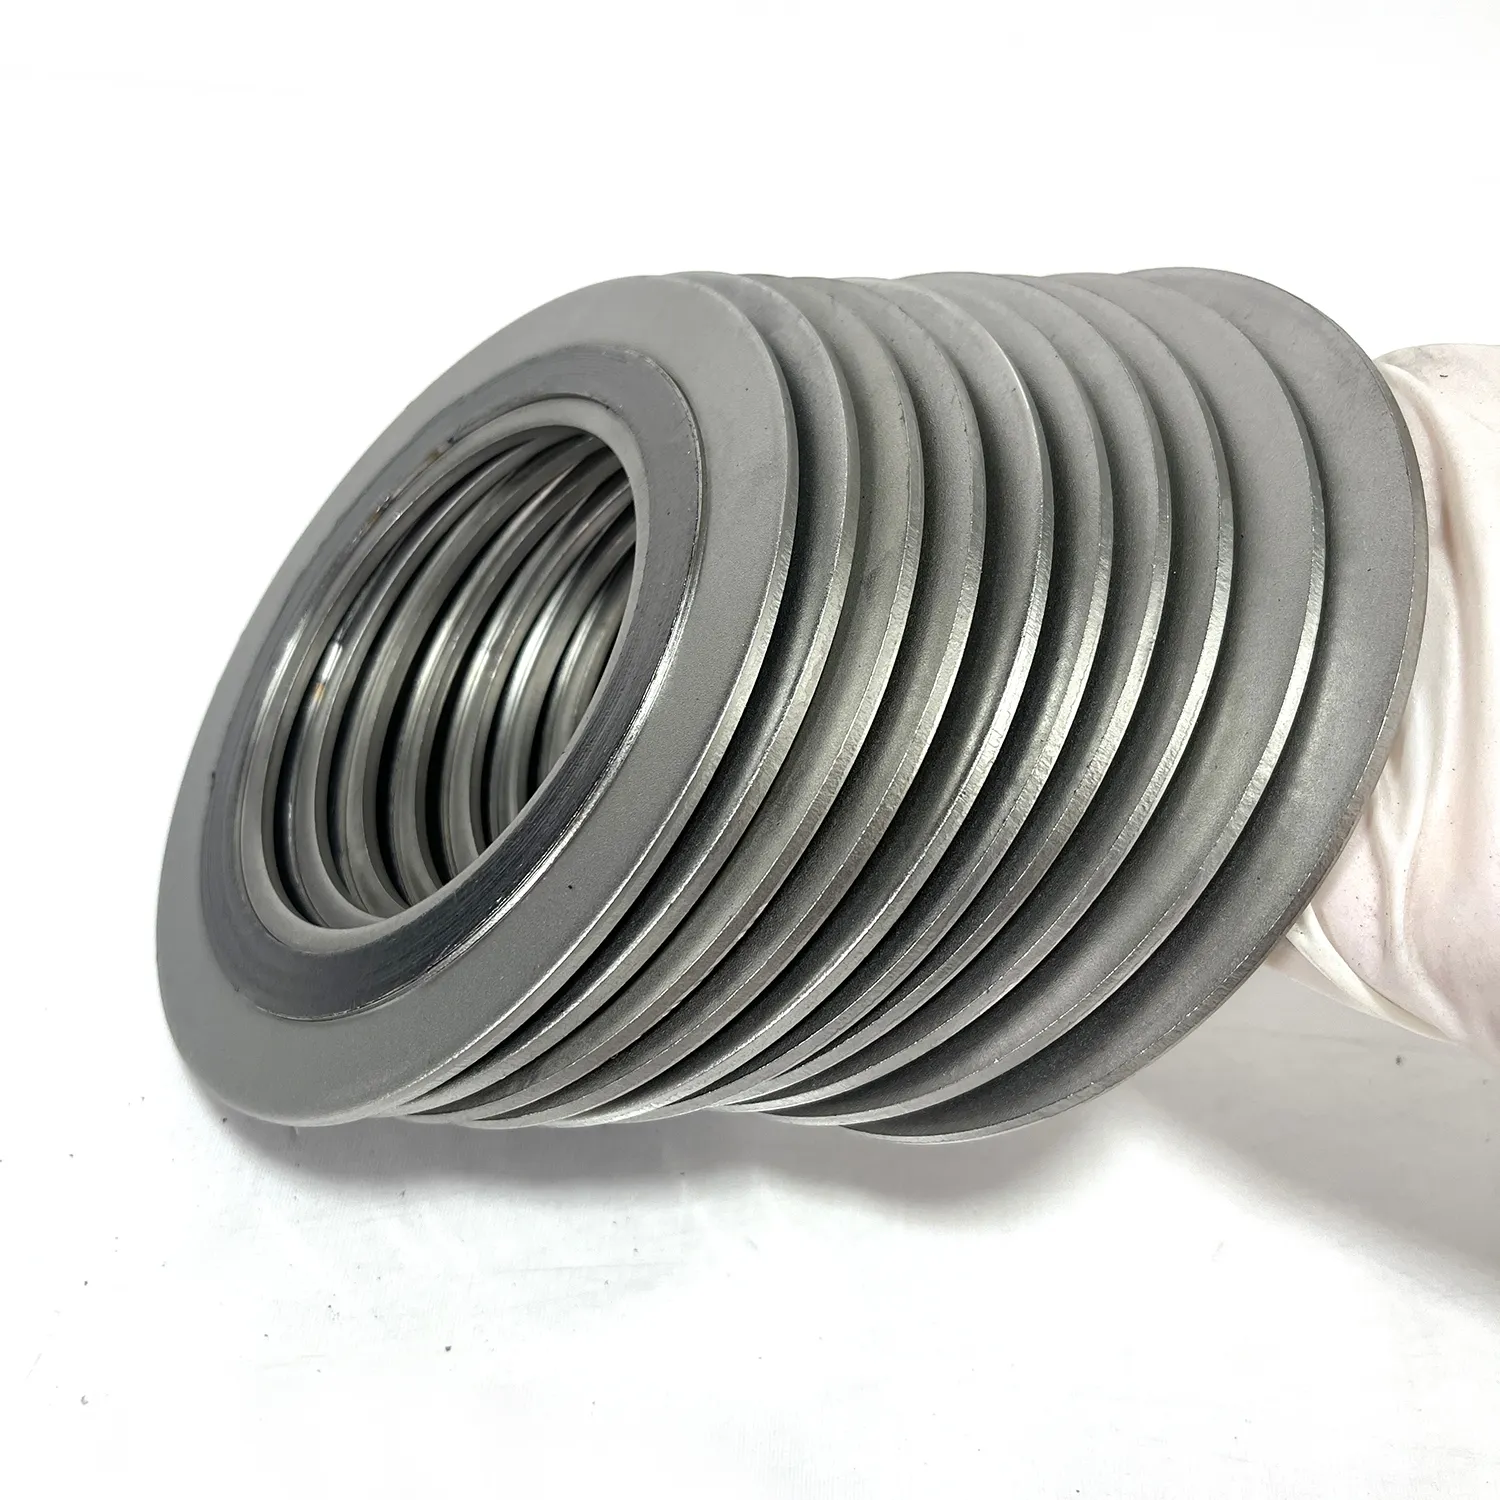 Pipe Flange Gasket Metal Ring 304 Stainless Steel Graphite Asme B16.20 Spiral Wound Gasket